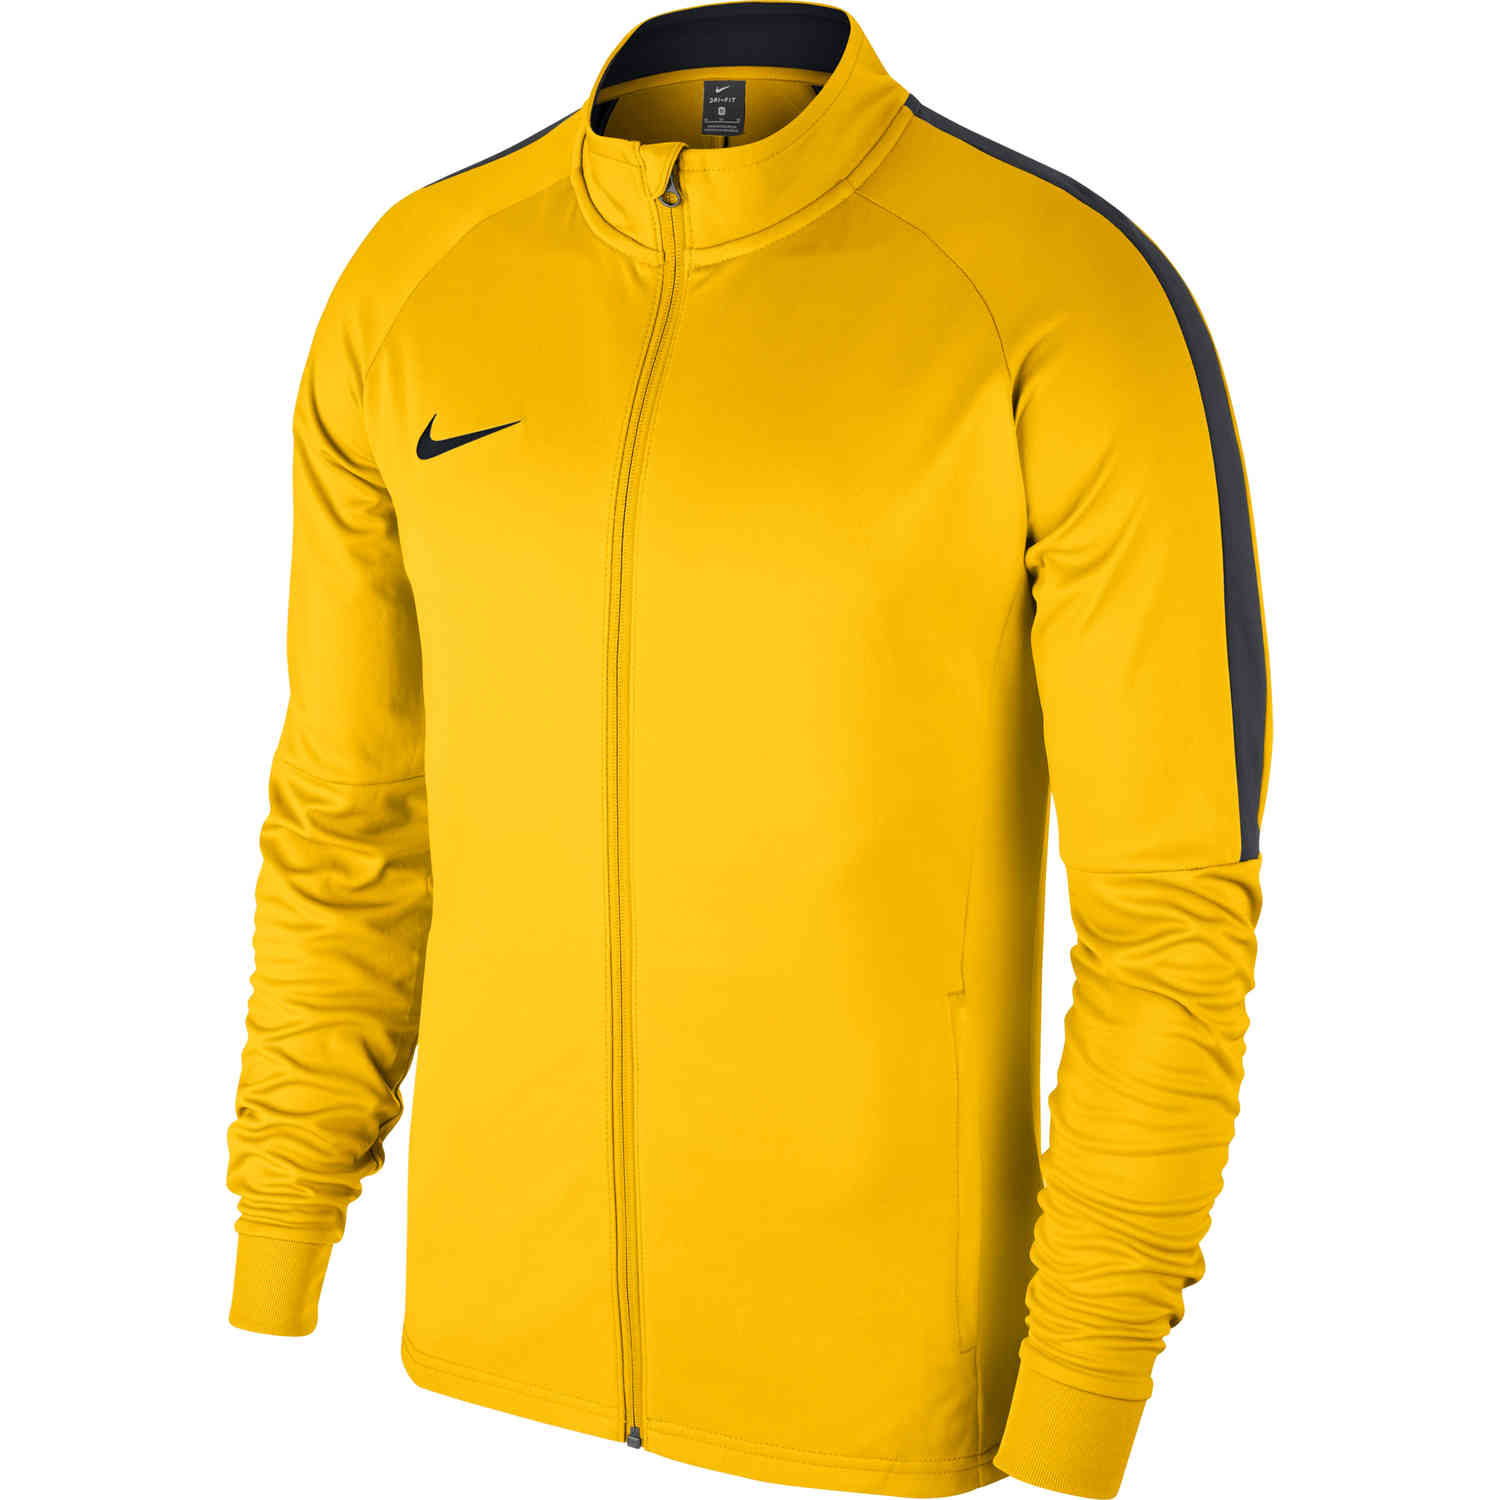 Nike Jacket - Tour Yellow - SoccerPro